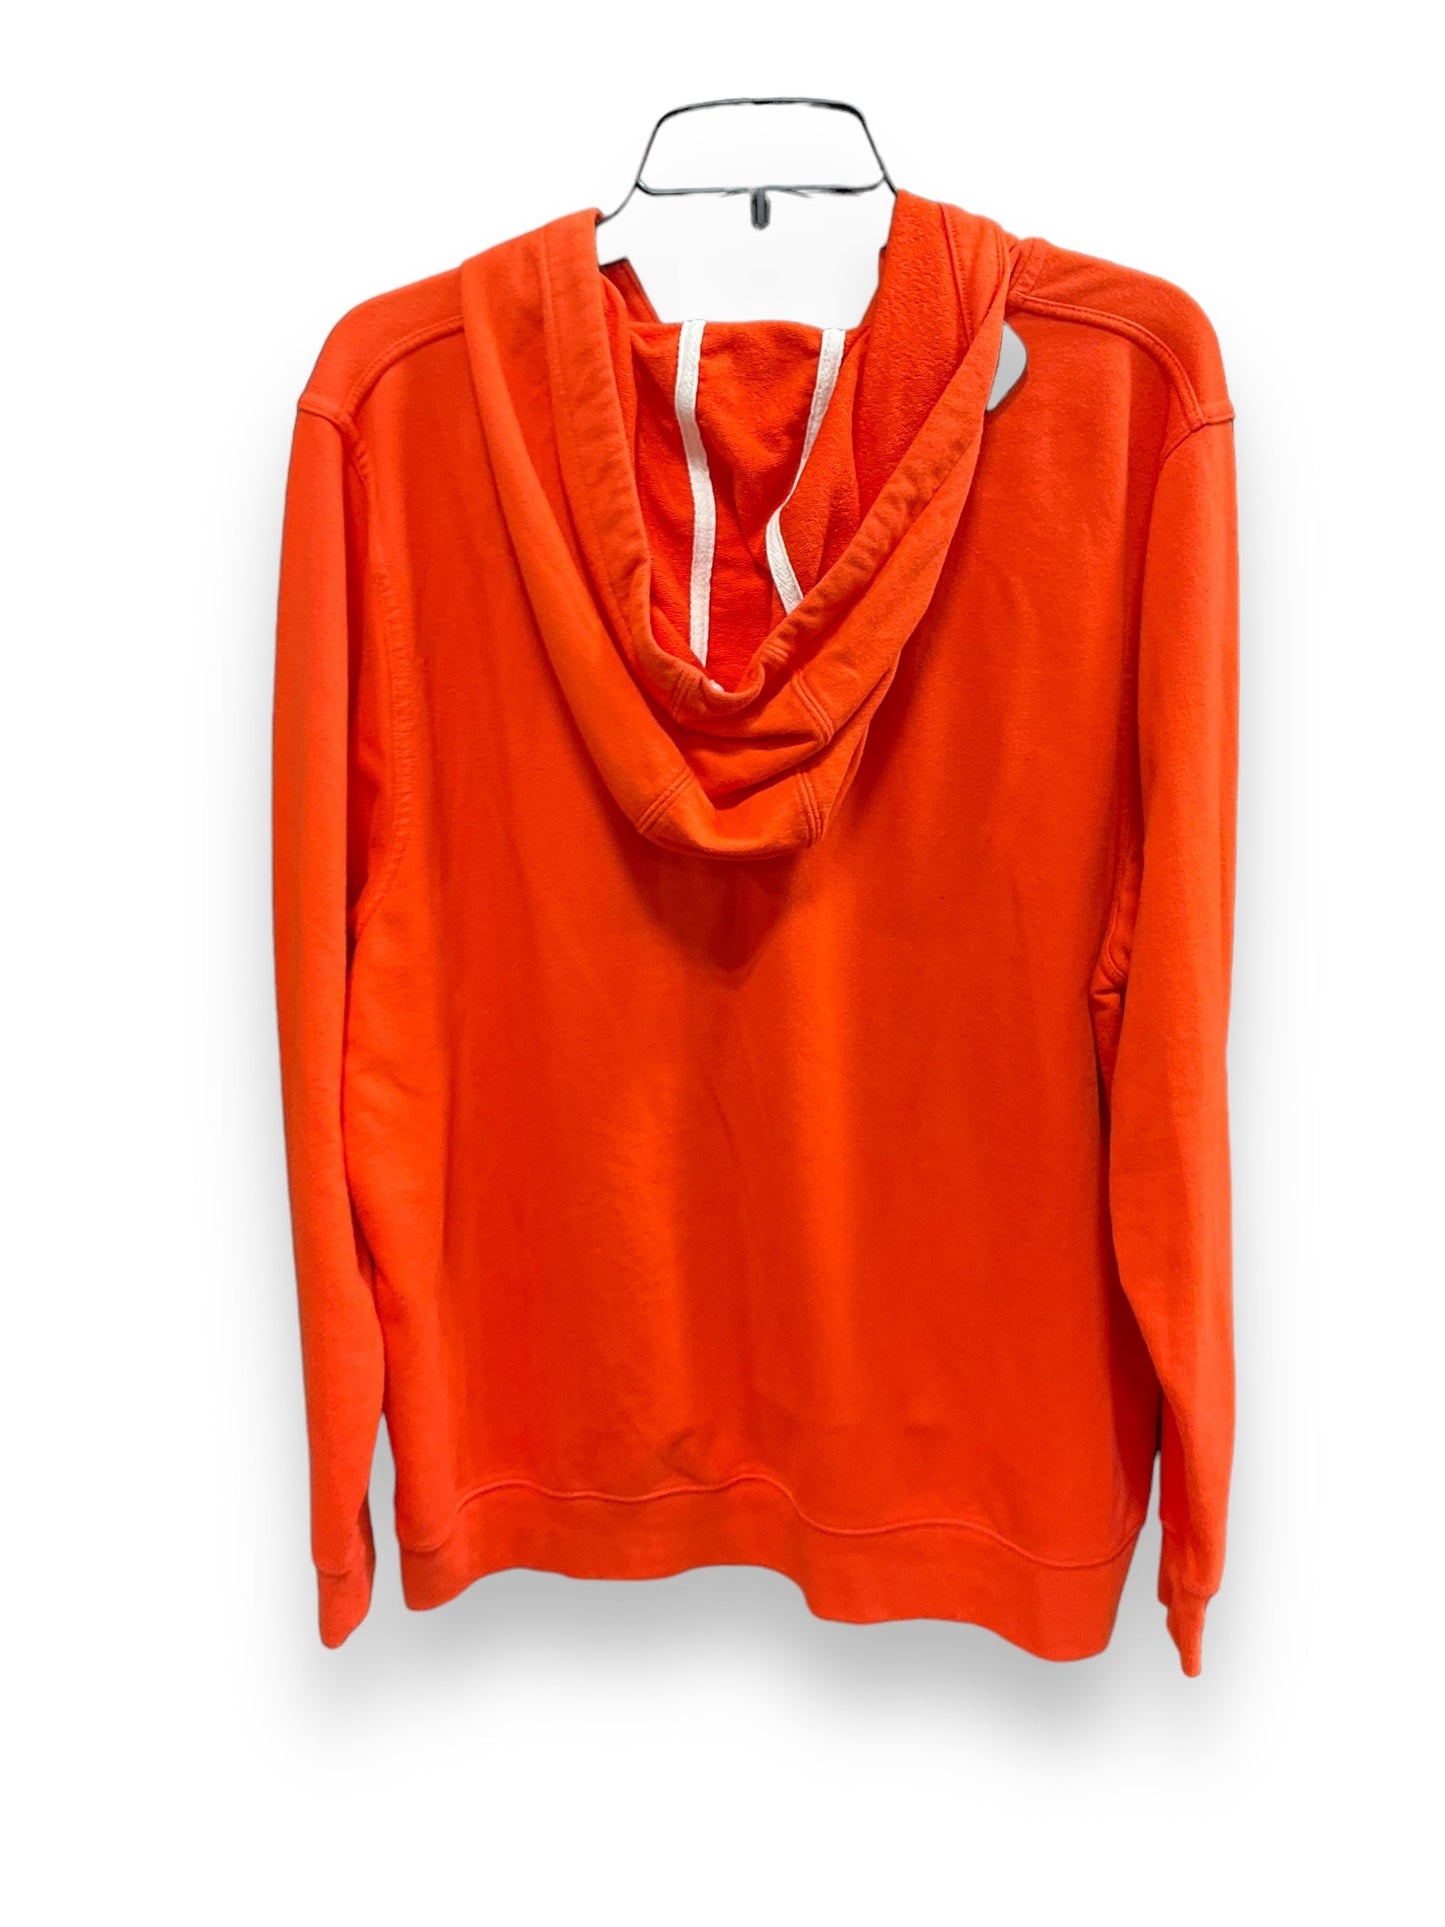 Orange Sweatshirt Hoodie J. Crew, Size 2x